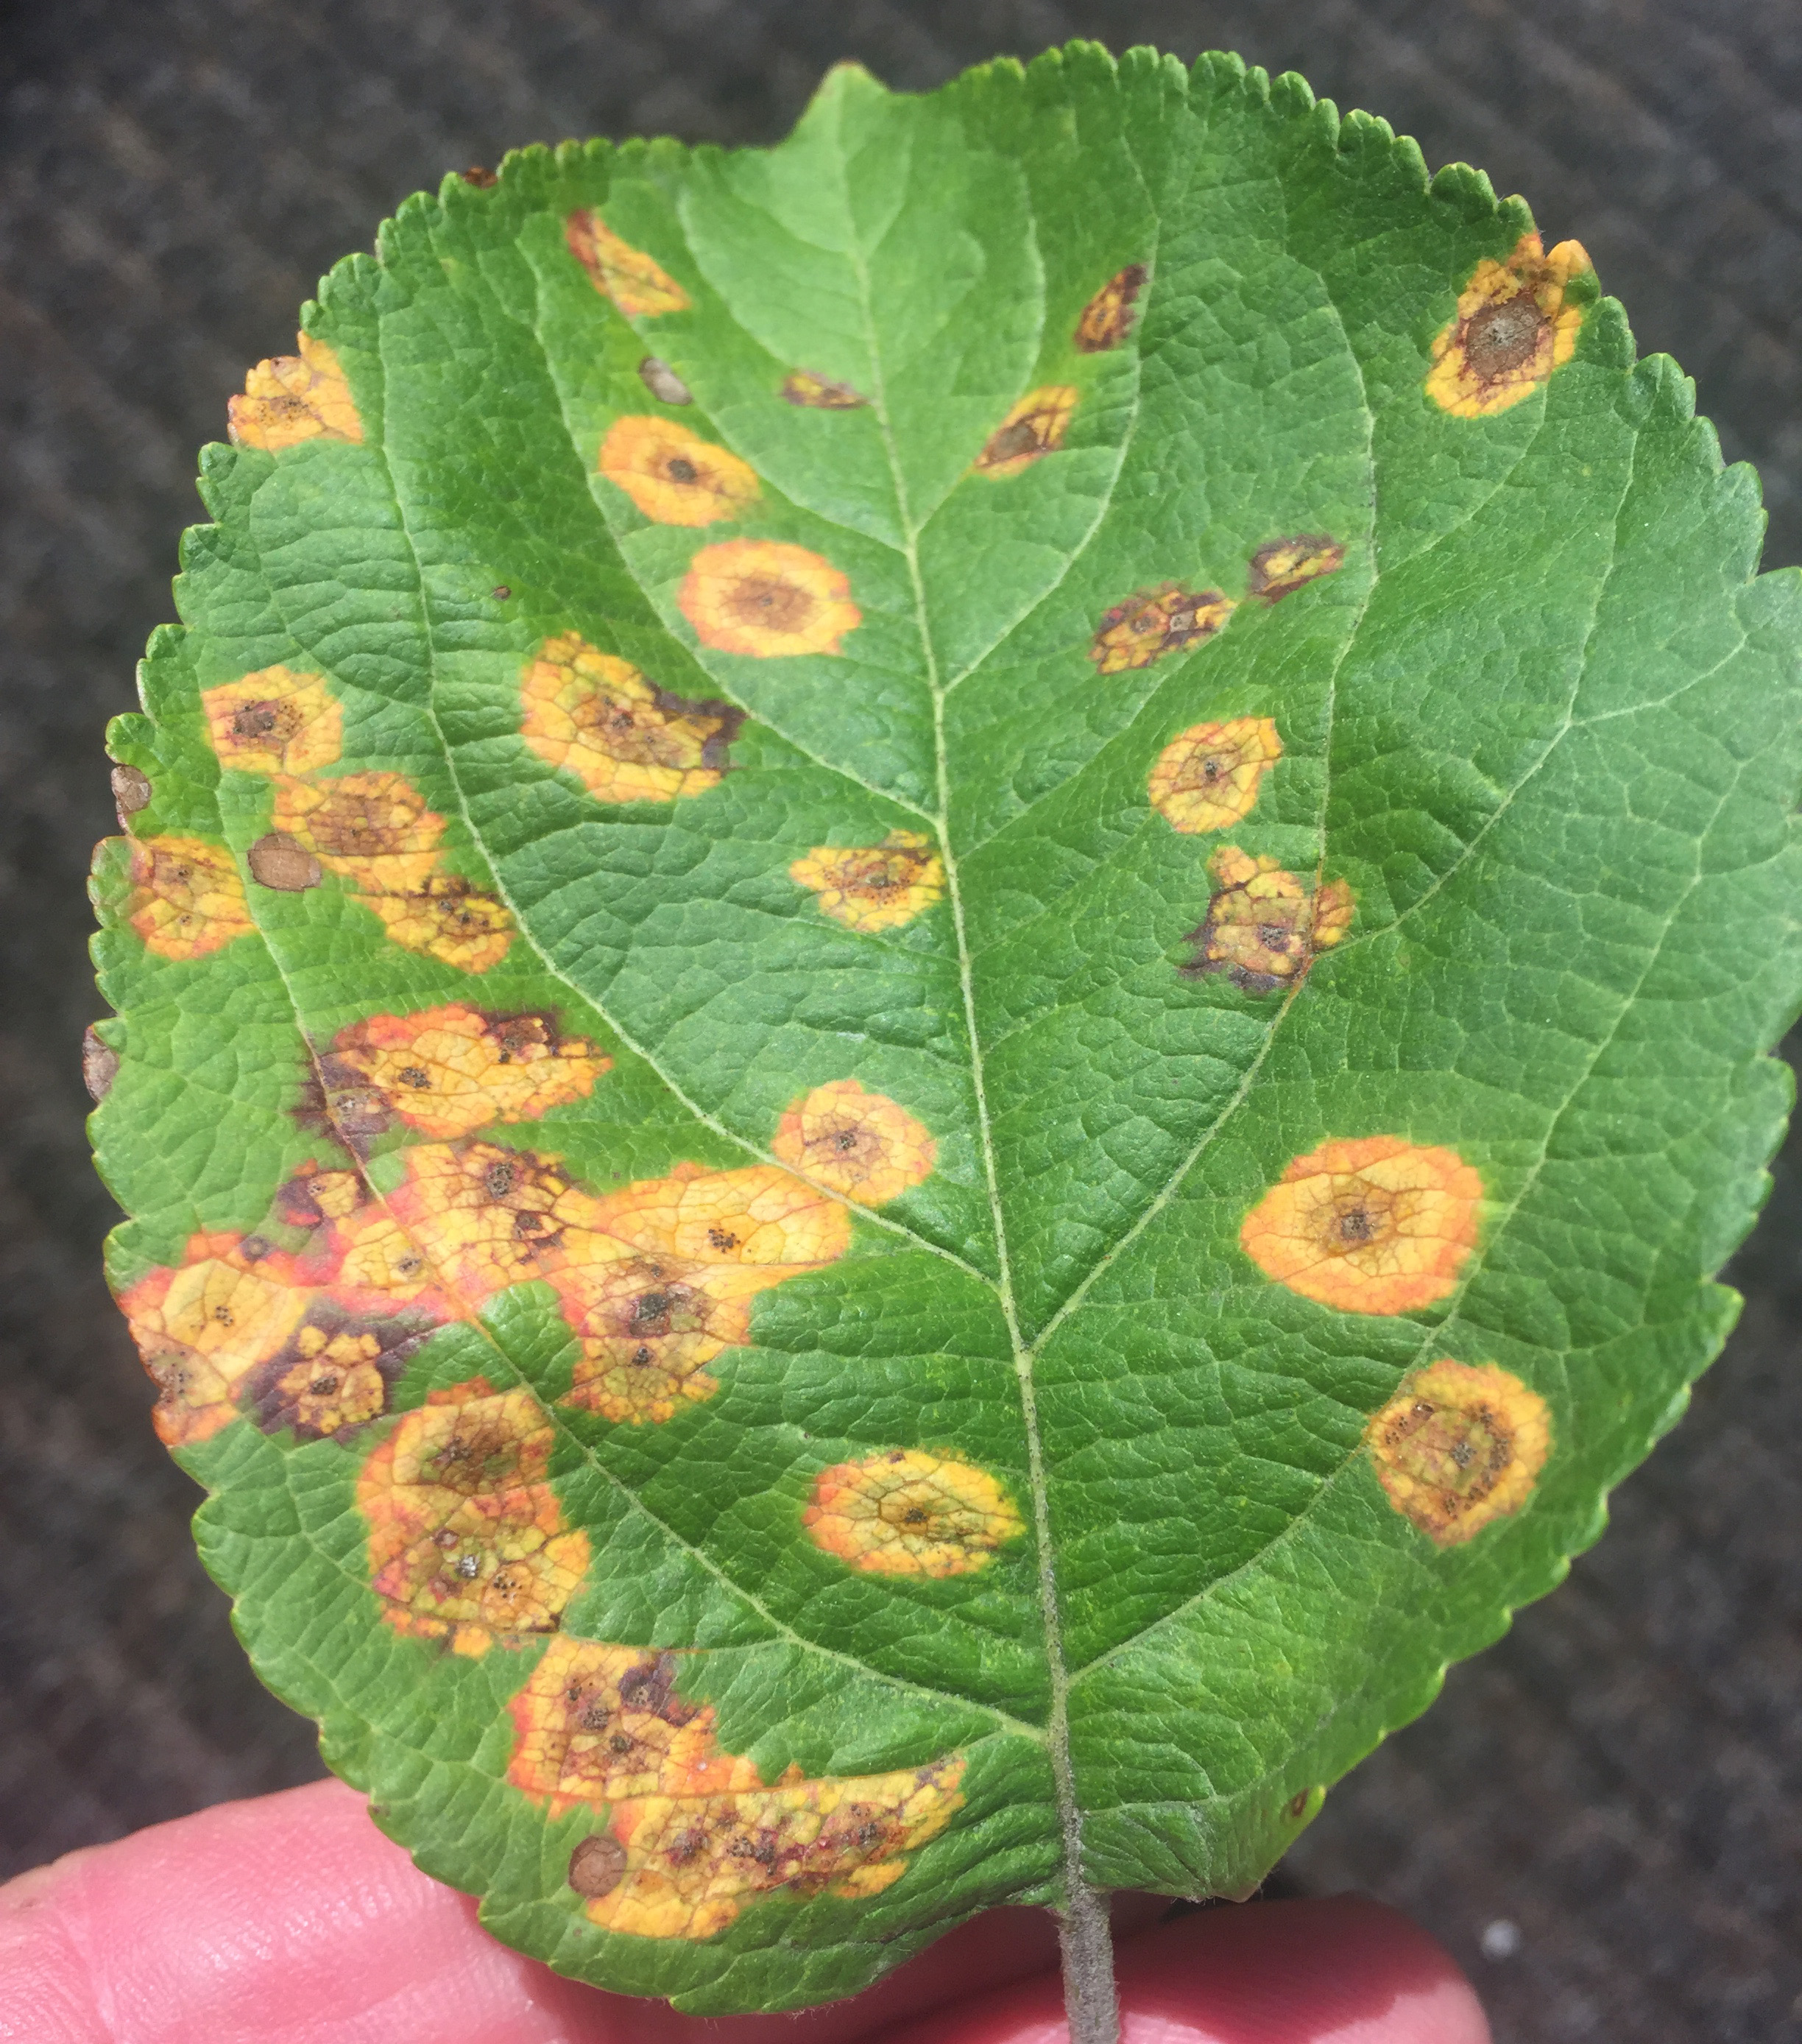 Cedar apple rust symptoms on leaf.